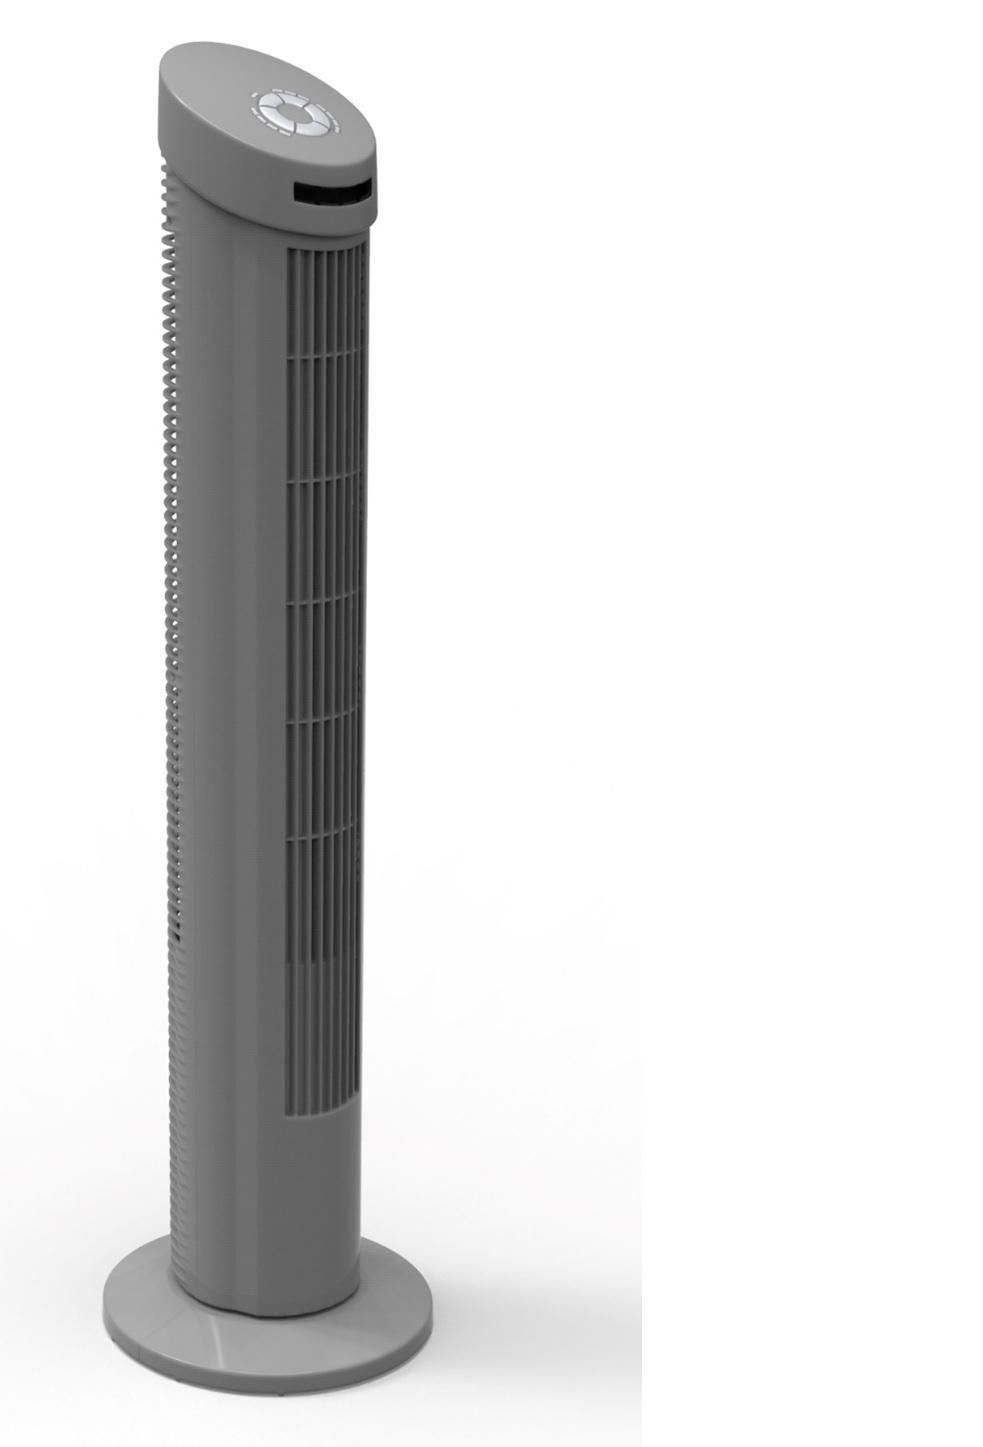 Seville Classics UltraSlimline 40'' Oscillating Tower Fan w/ Remote, Gary | eBay